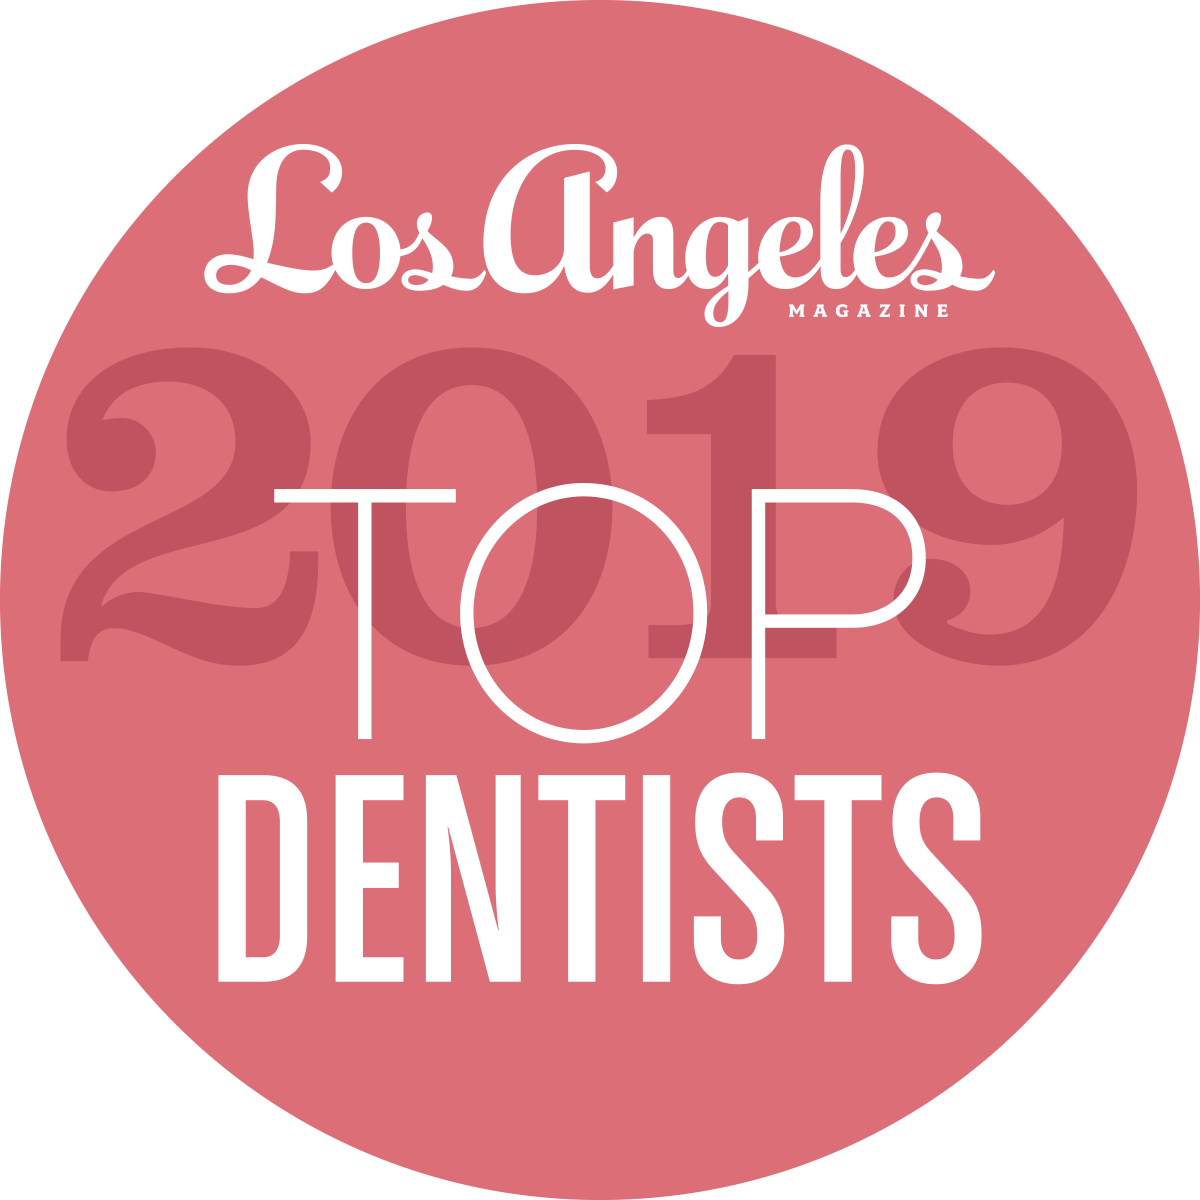 Los Angeles Top Dentists 2019